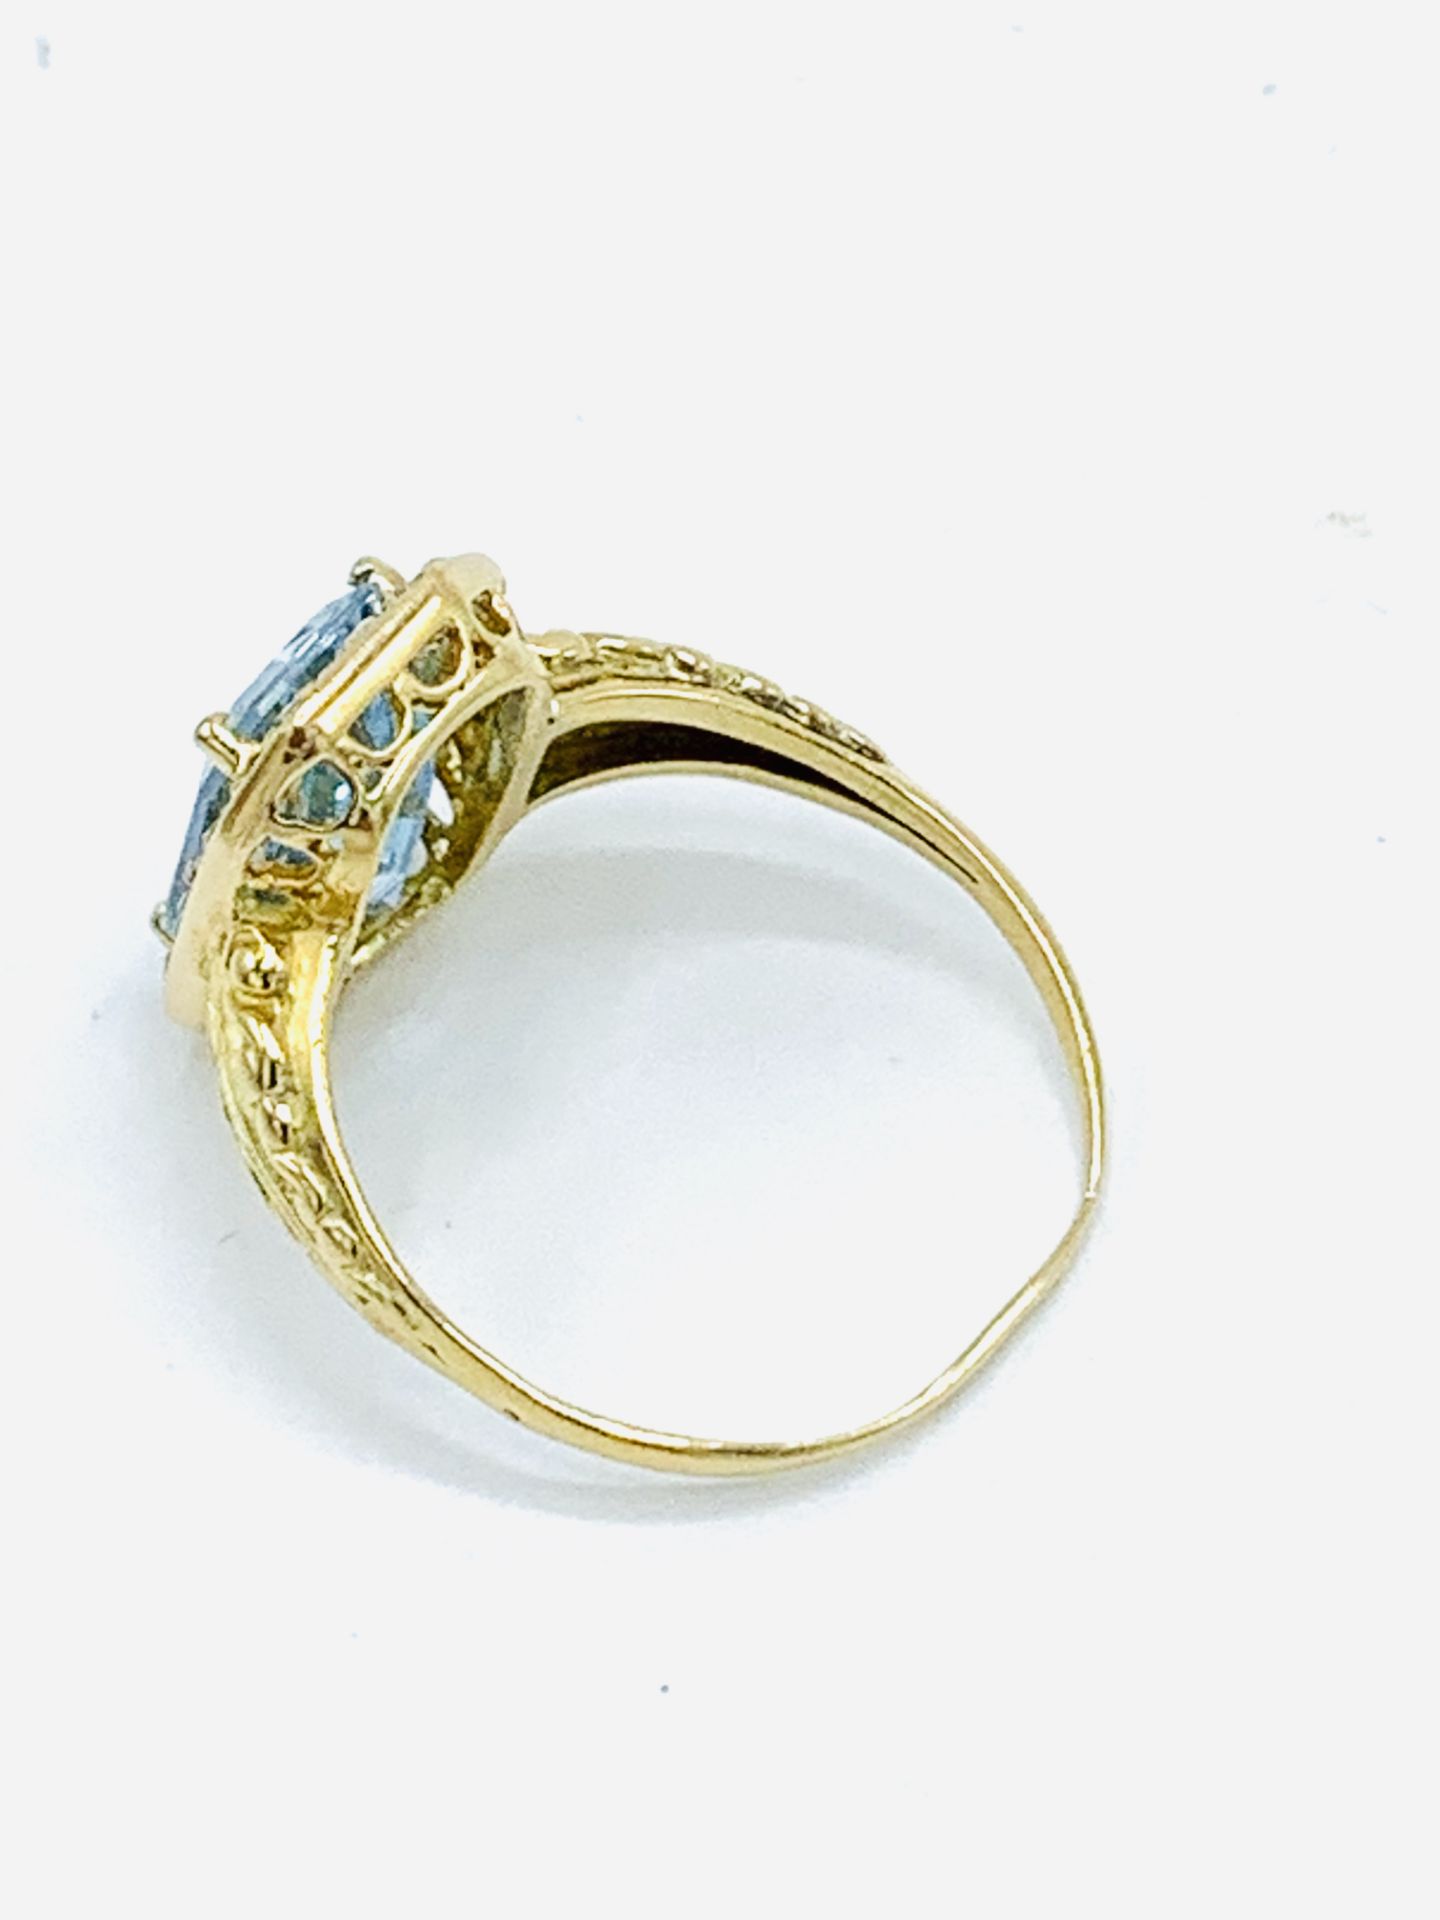 Aquamarine and diamond ring. - Image 3 of 4